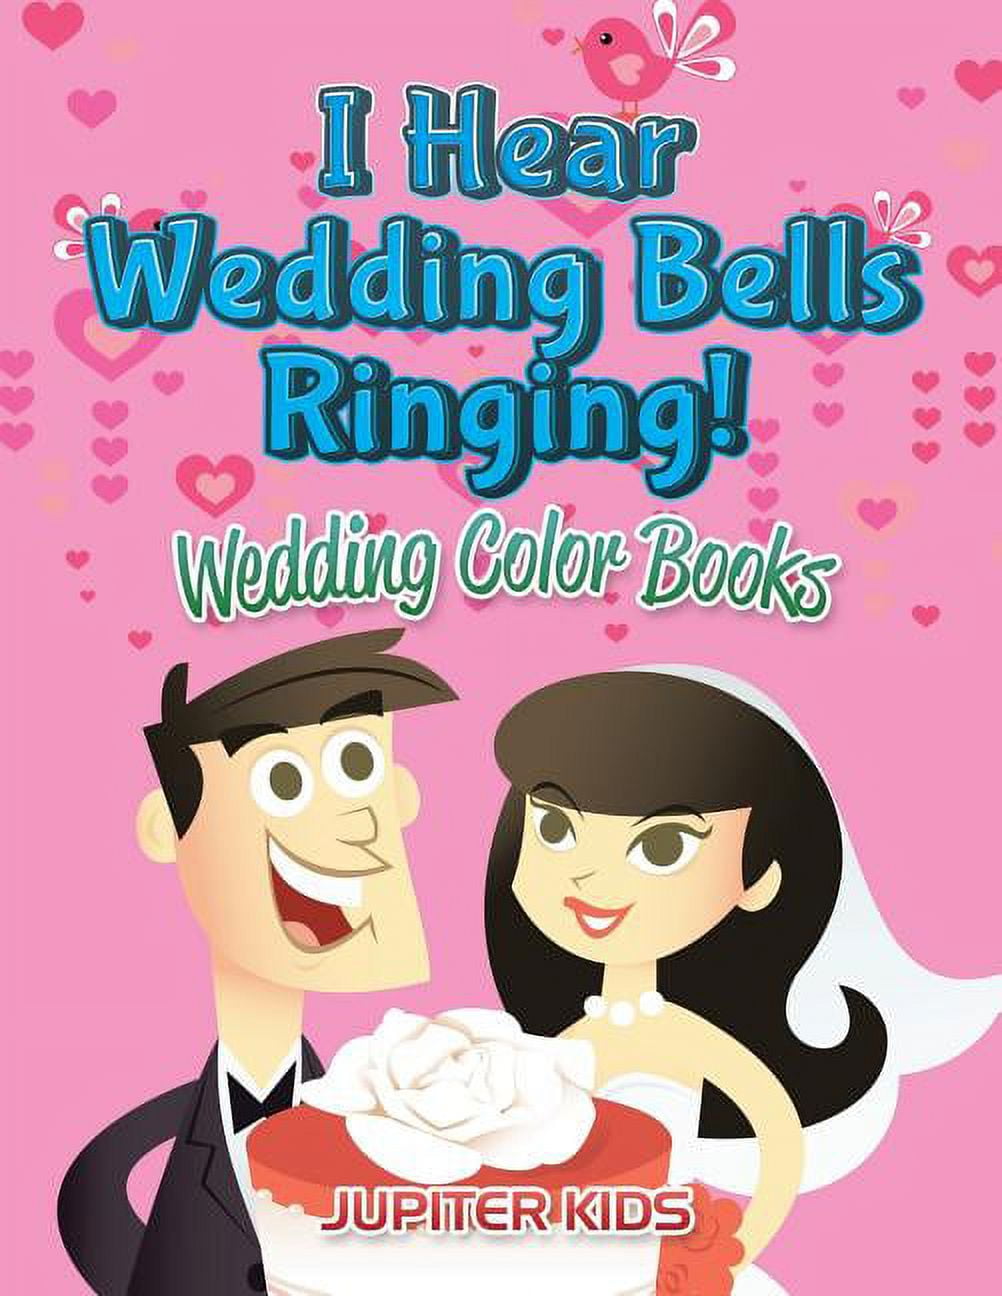 Wedding Bells Are Ringing Blogs & Articles - Grand Rapids Divorce Blog |  Johnsen Wikander, P.C.